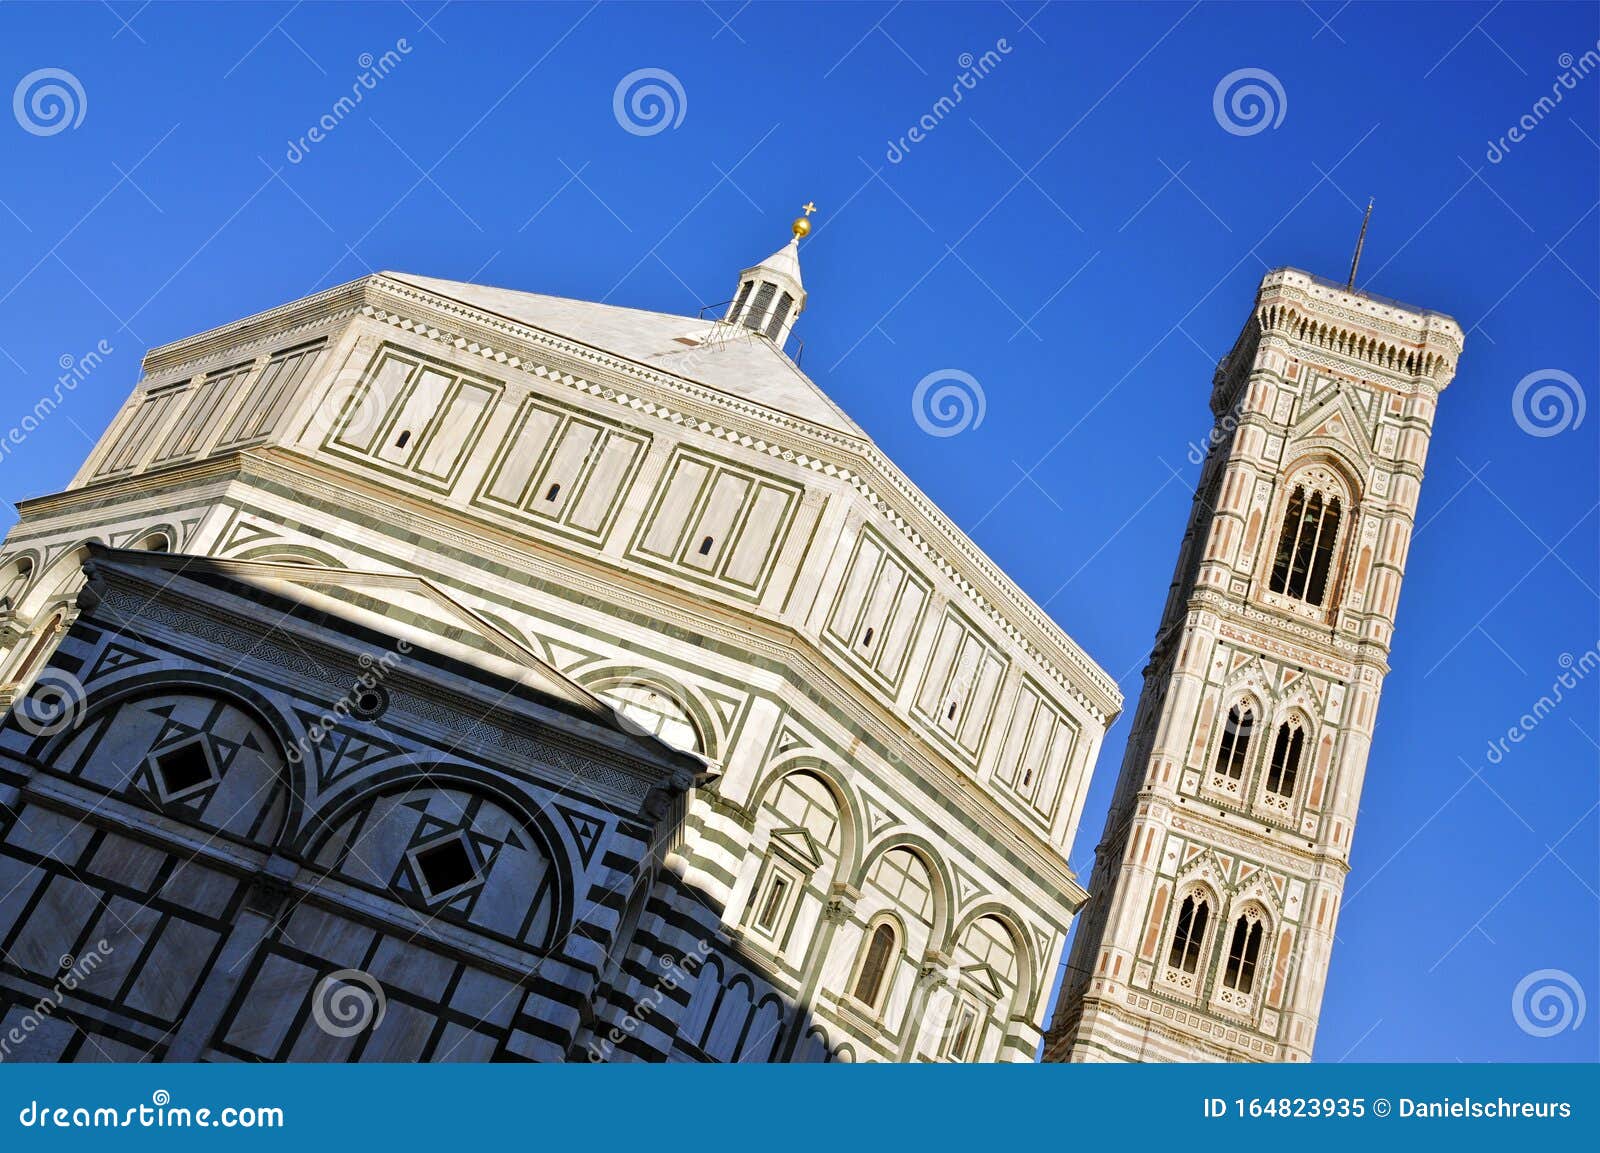 the baptistery of saint john and campanile di giotto, florence